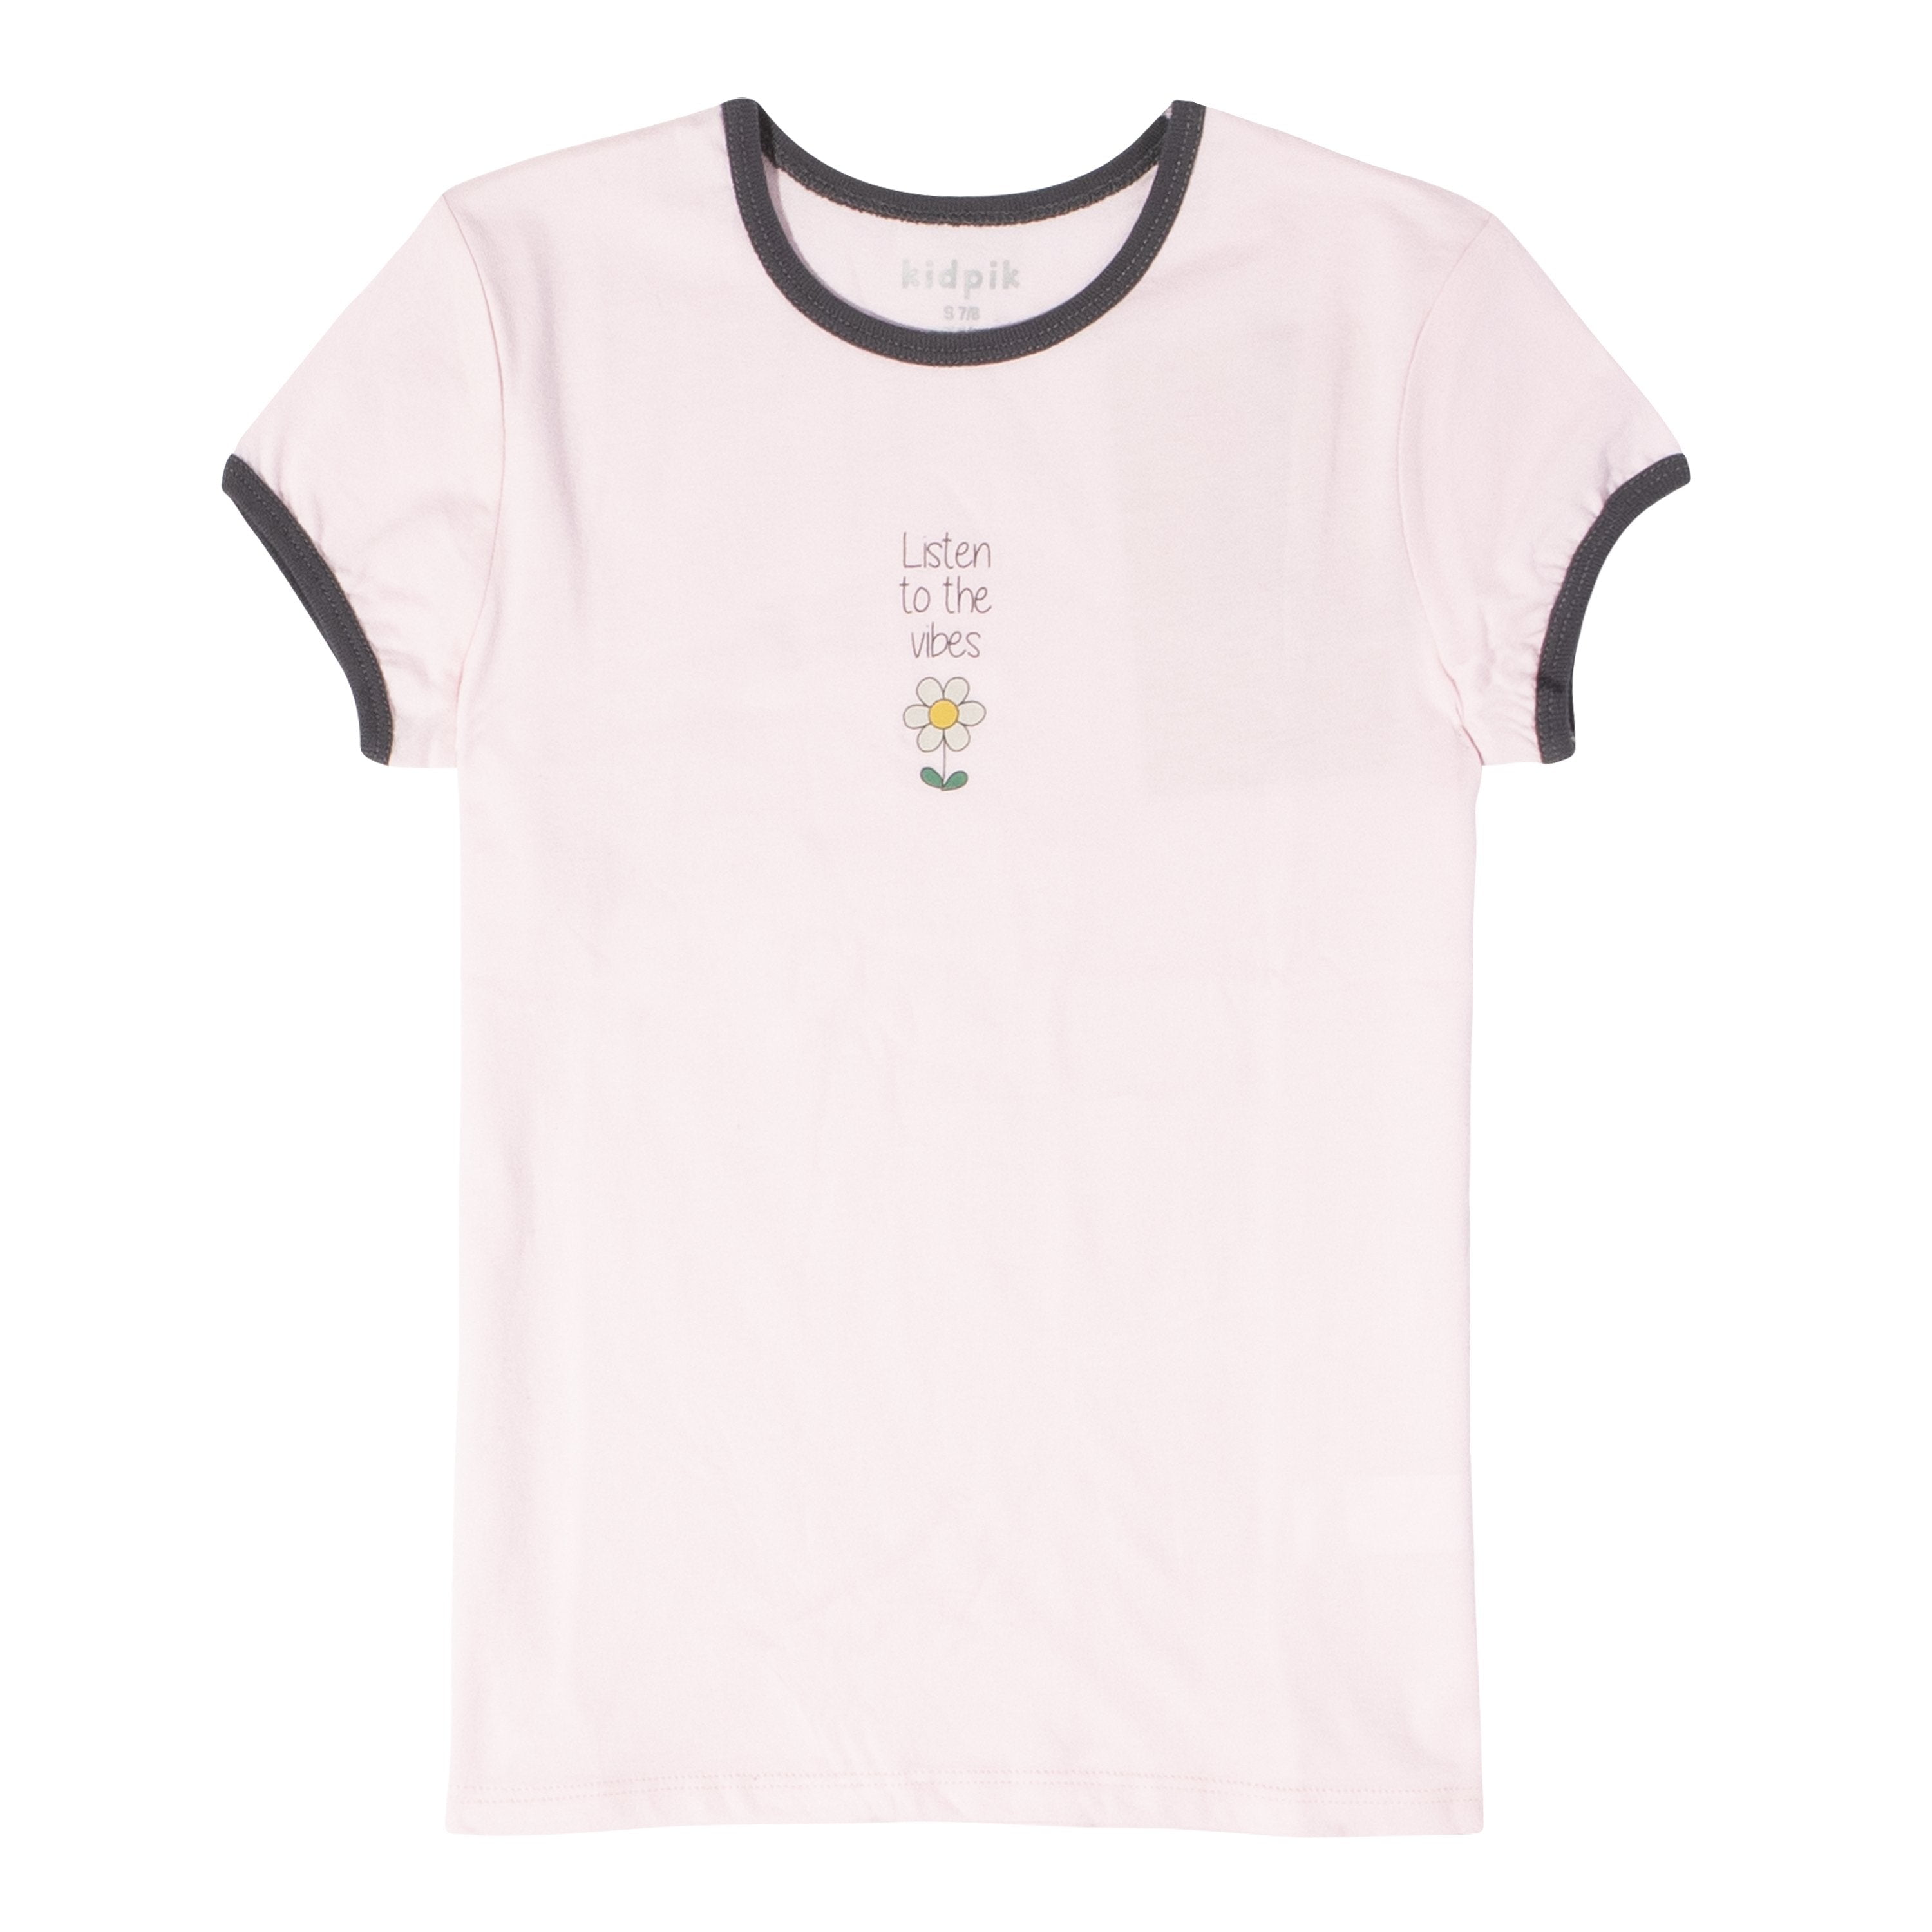 KIDPIK Girls Short Sleeve Ringer Graphic T-Shirt, Size L (12) - Walmart.com